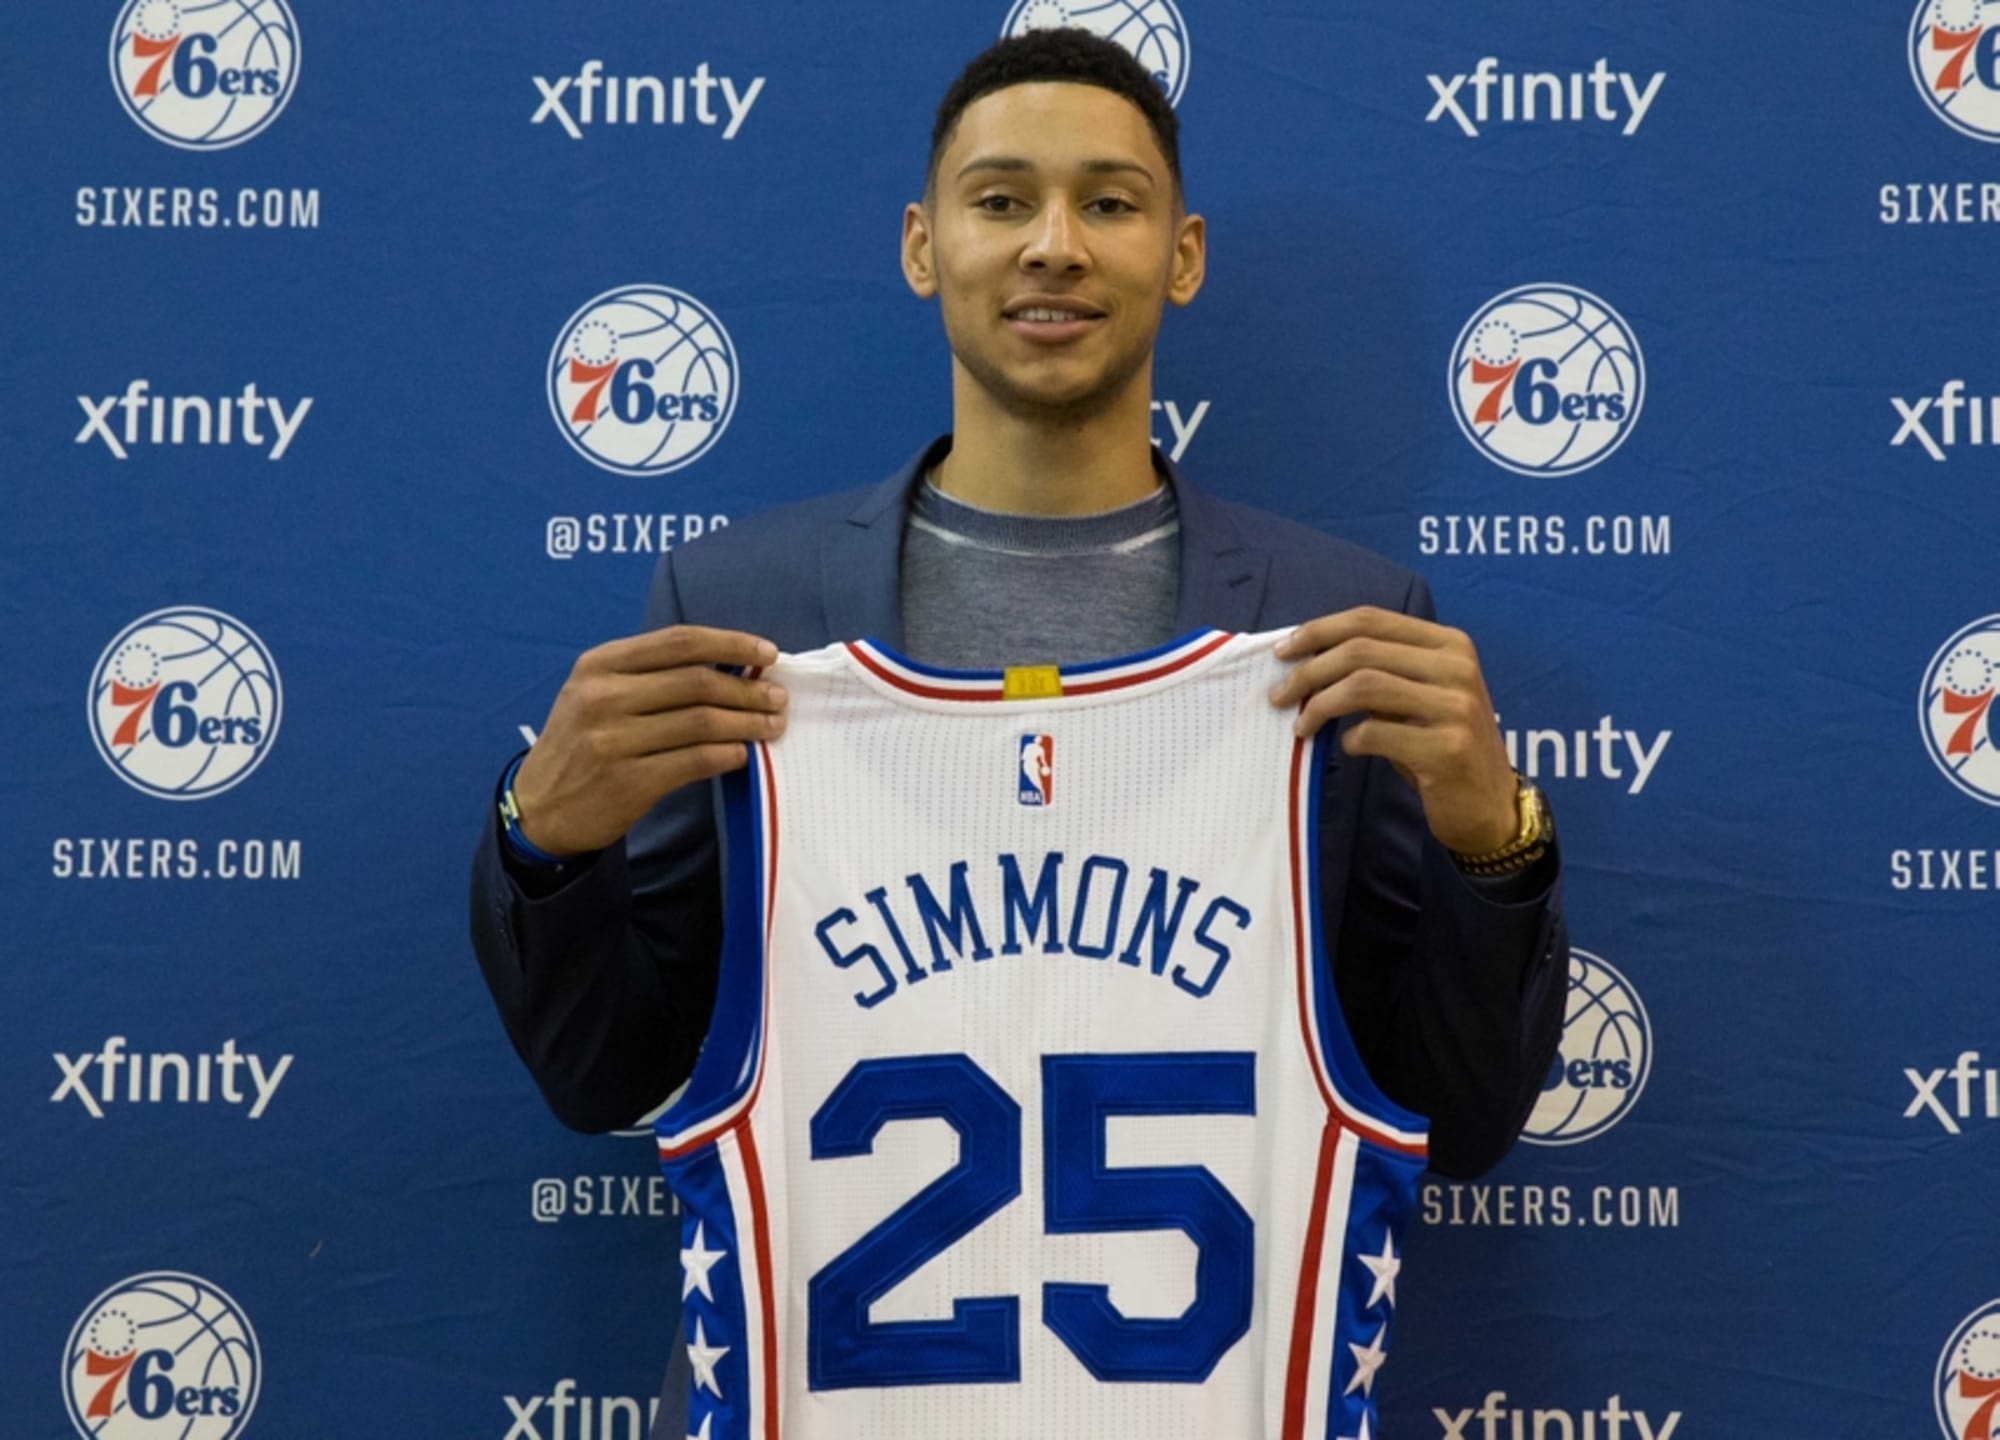 NBA Retweet on X: Odds on Ben Simmons' next team, if he gets